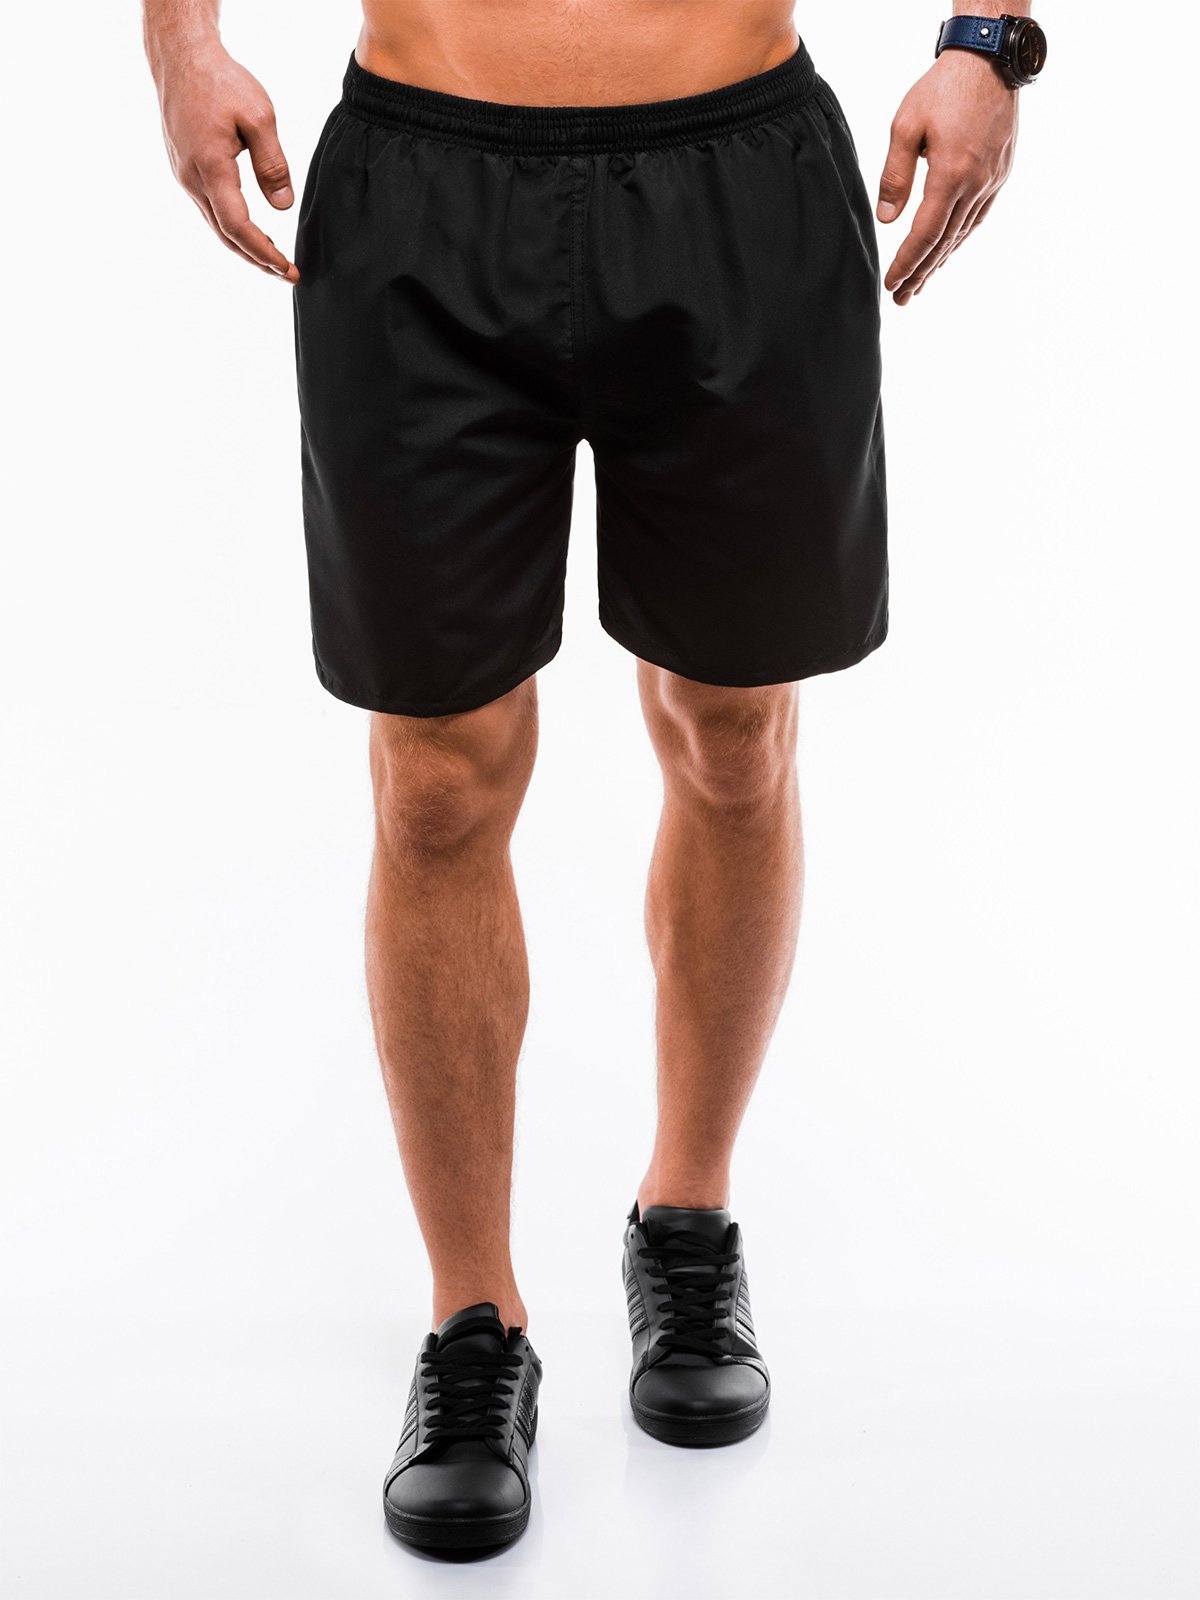 Men's shorts W192 - black | MODONE wholesale - Clothing For Men